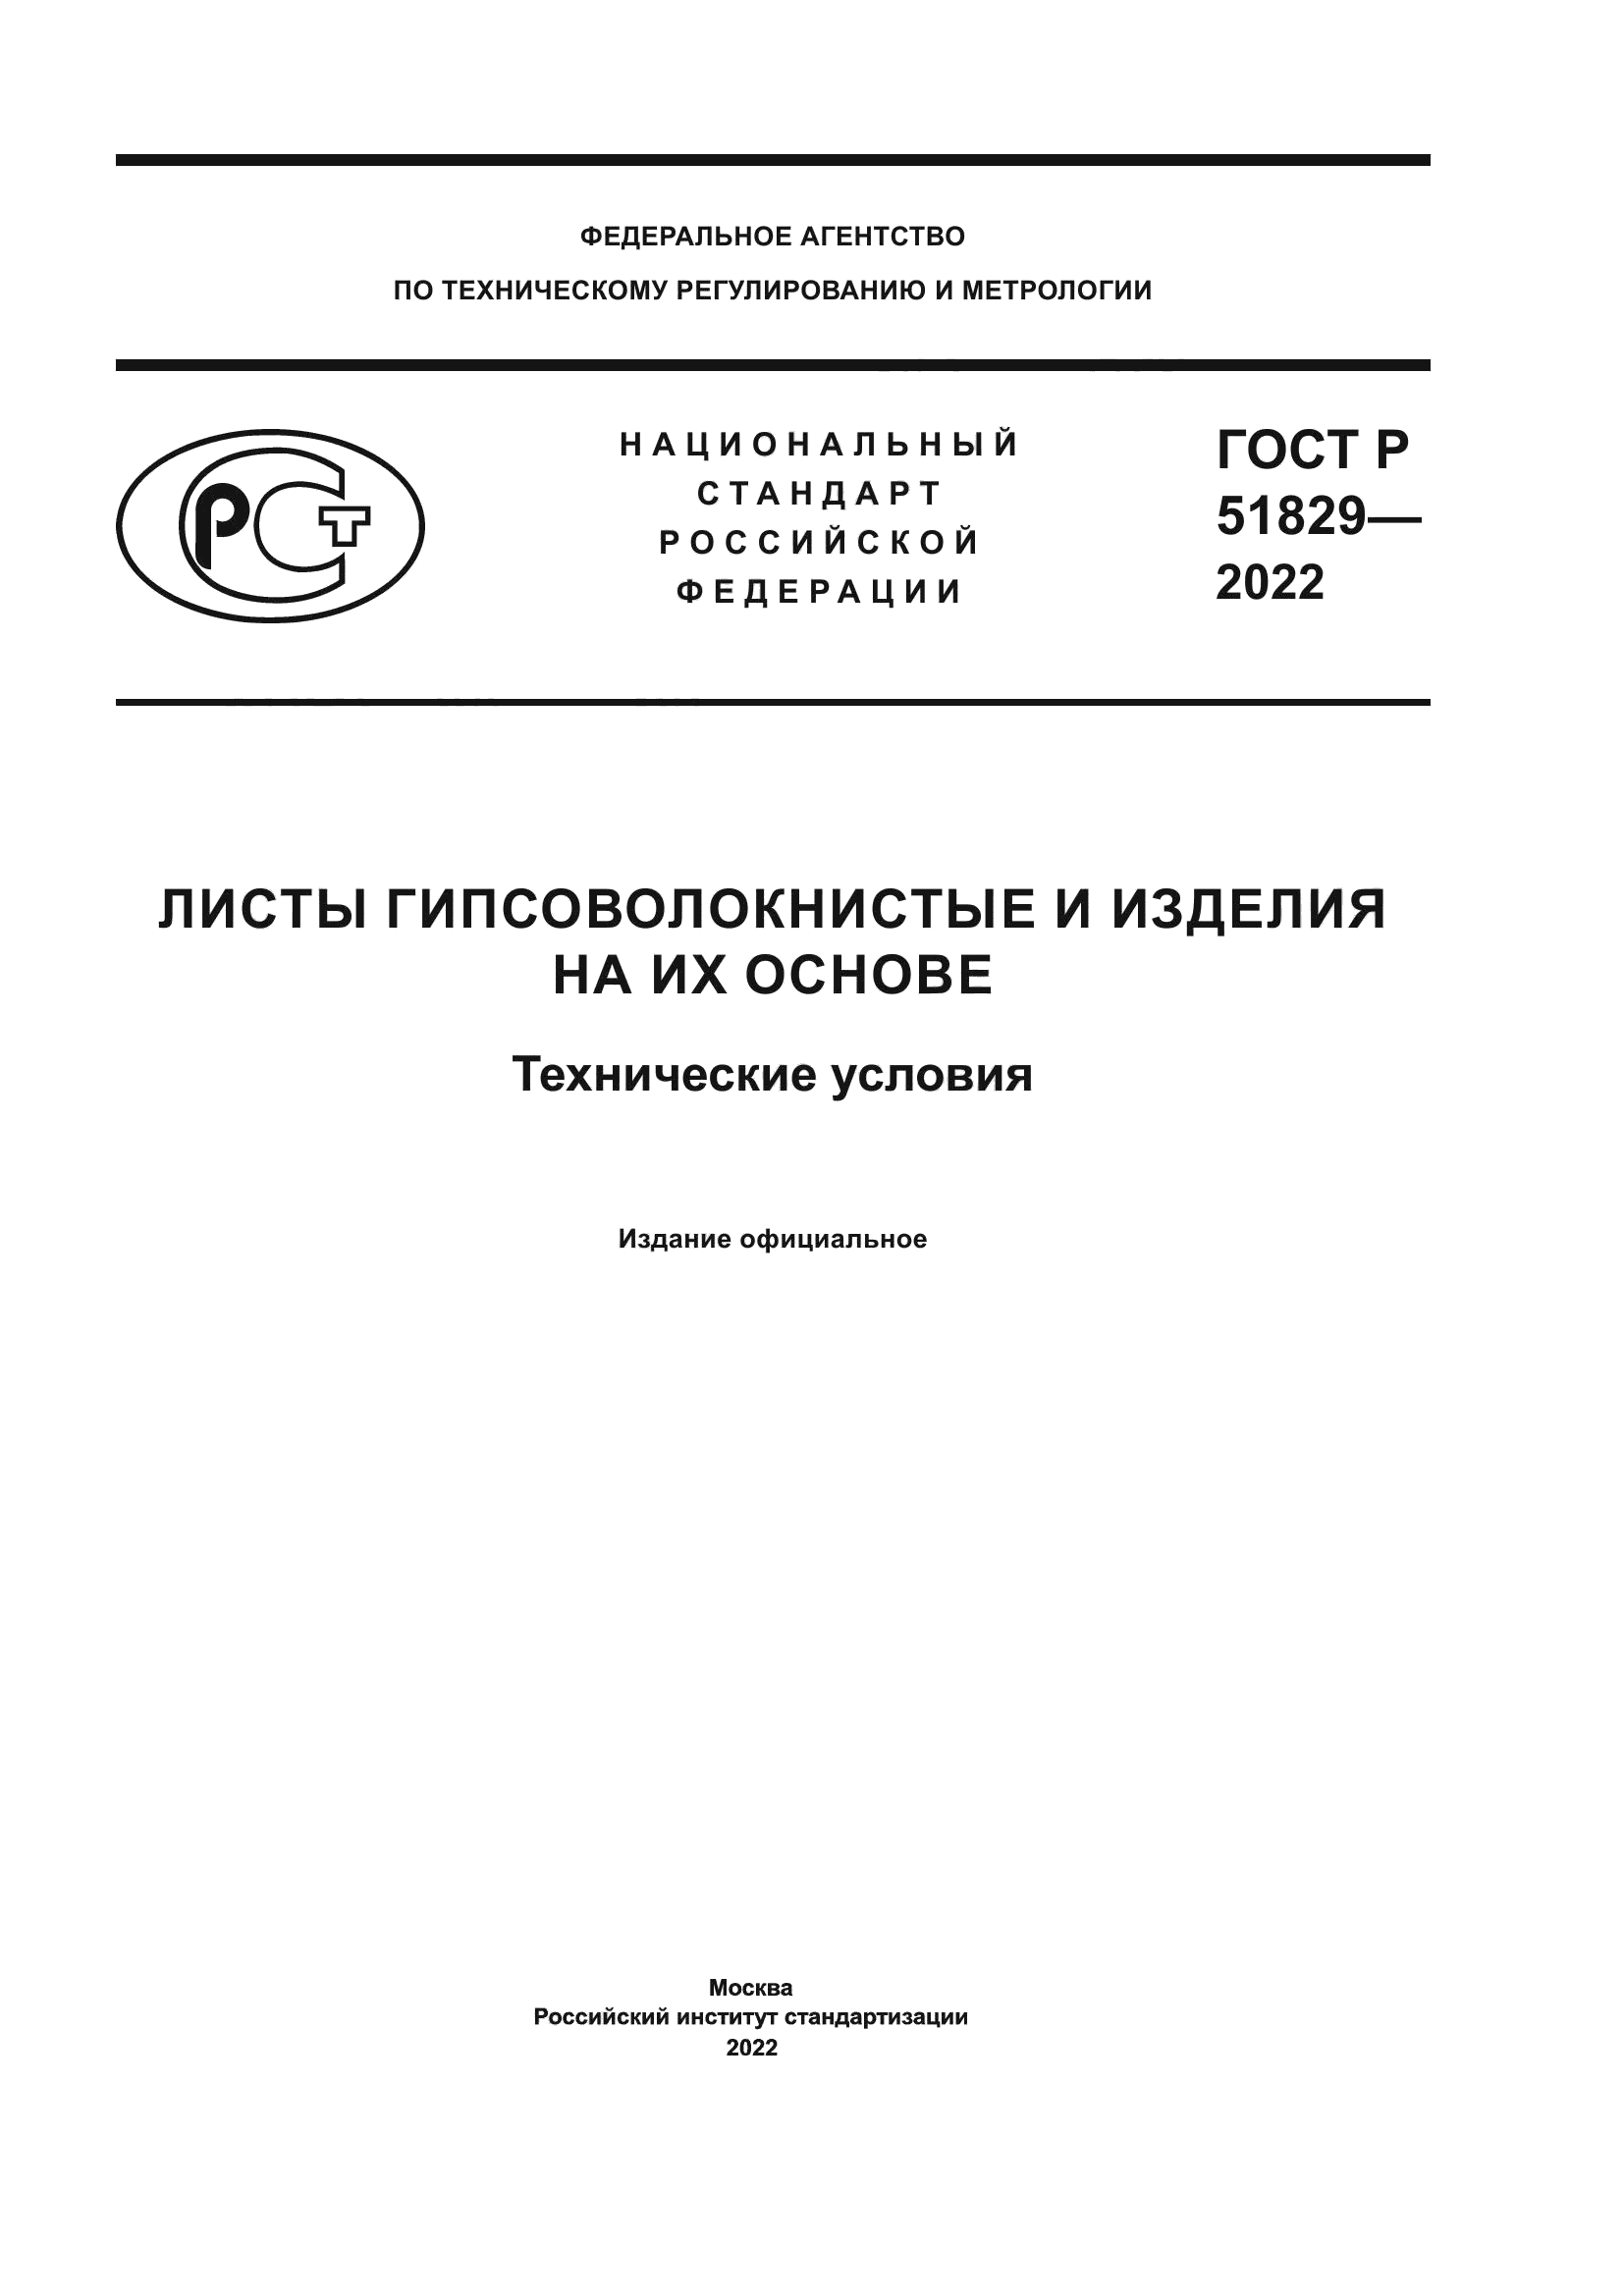 ГОСТ Р 51829-2022